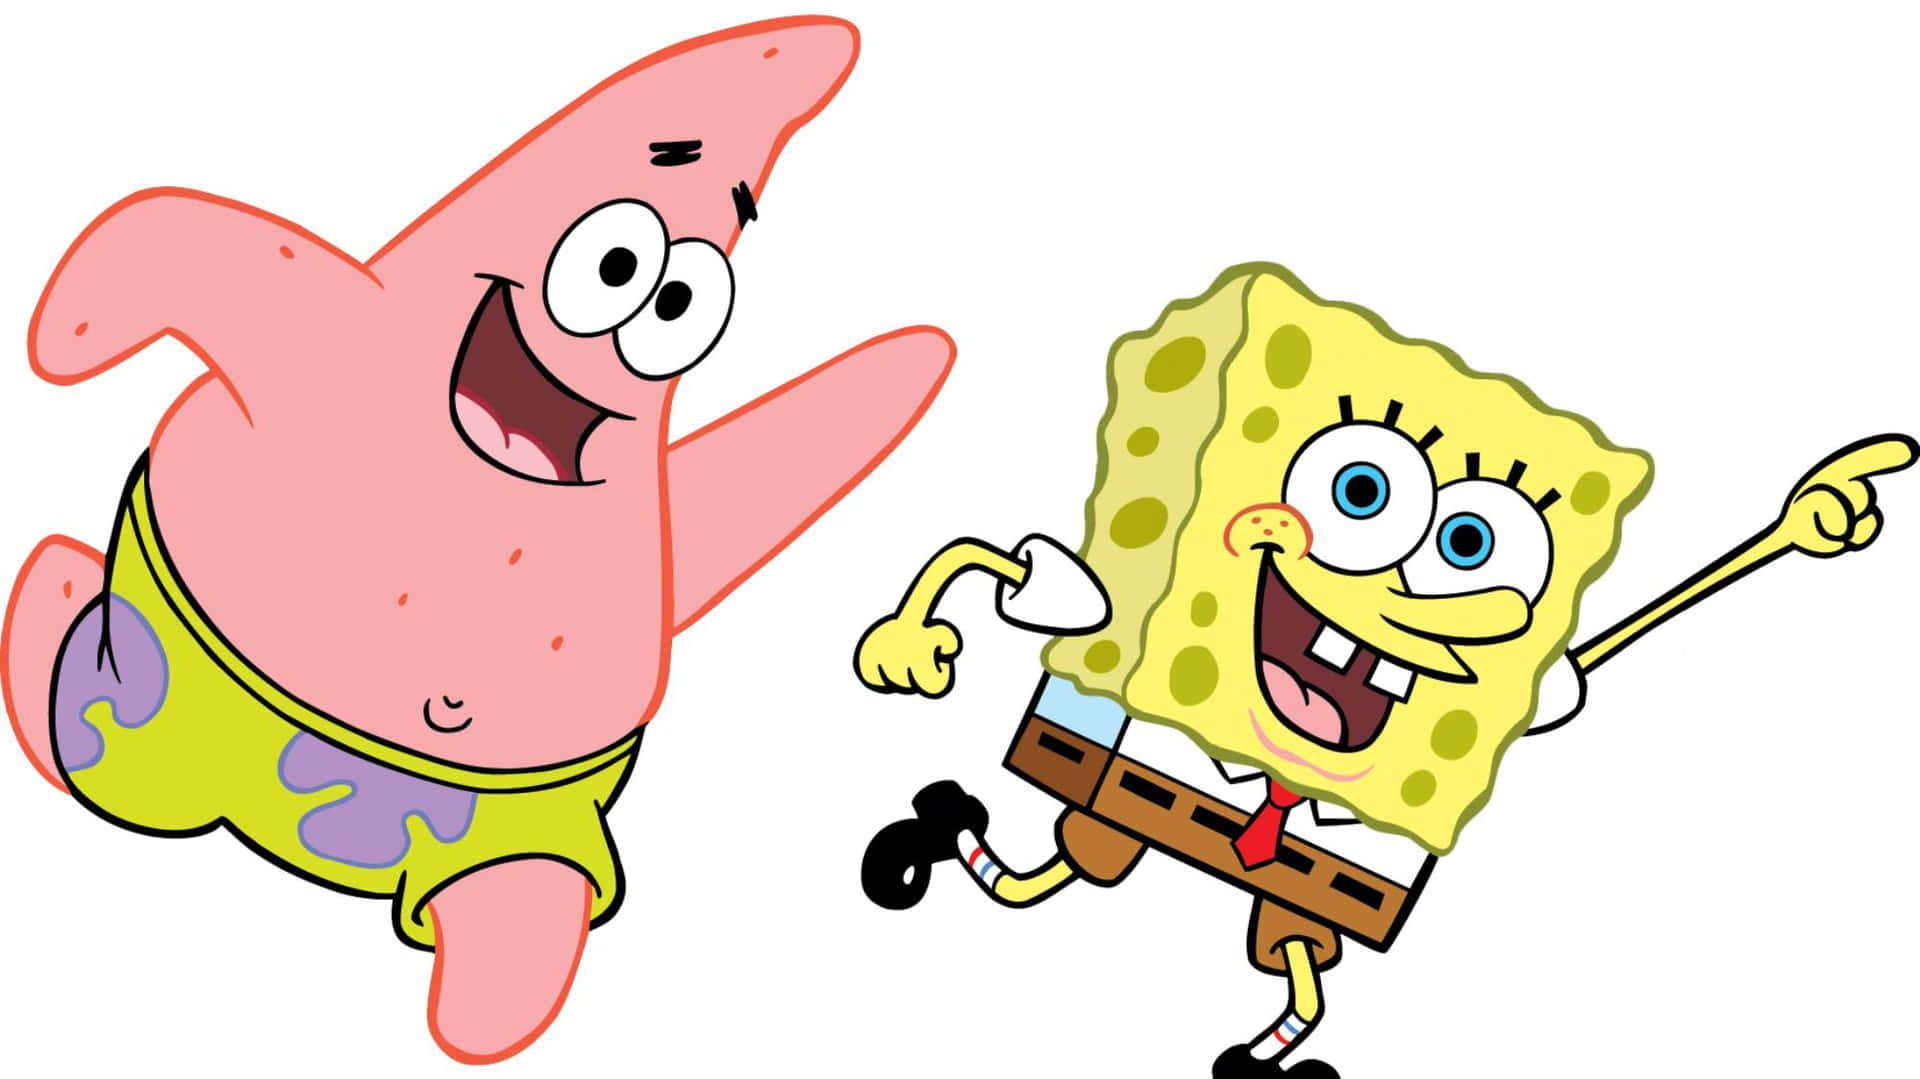 Spongebob Squarepants livin' it up in the colorful world of Bikini Bottom